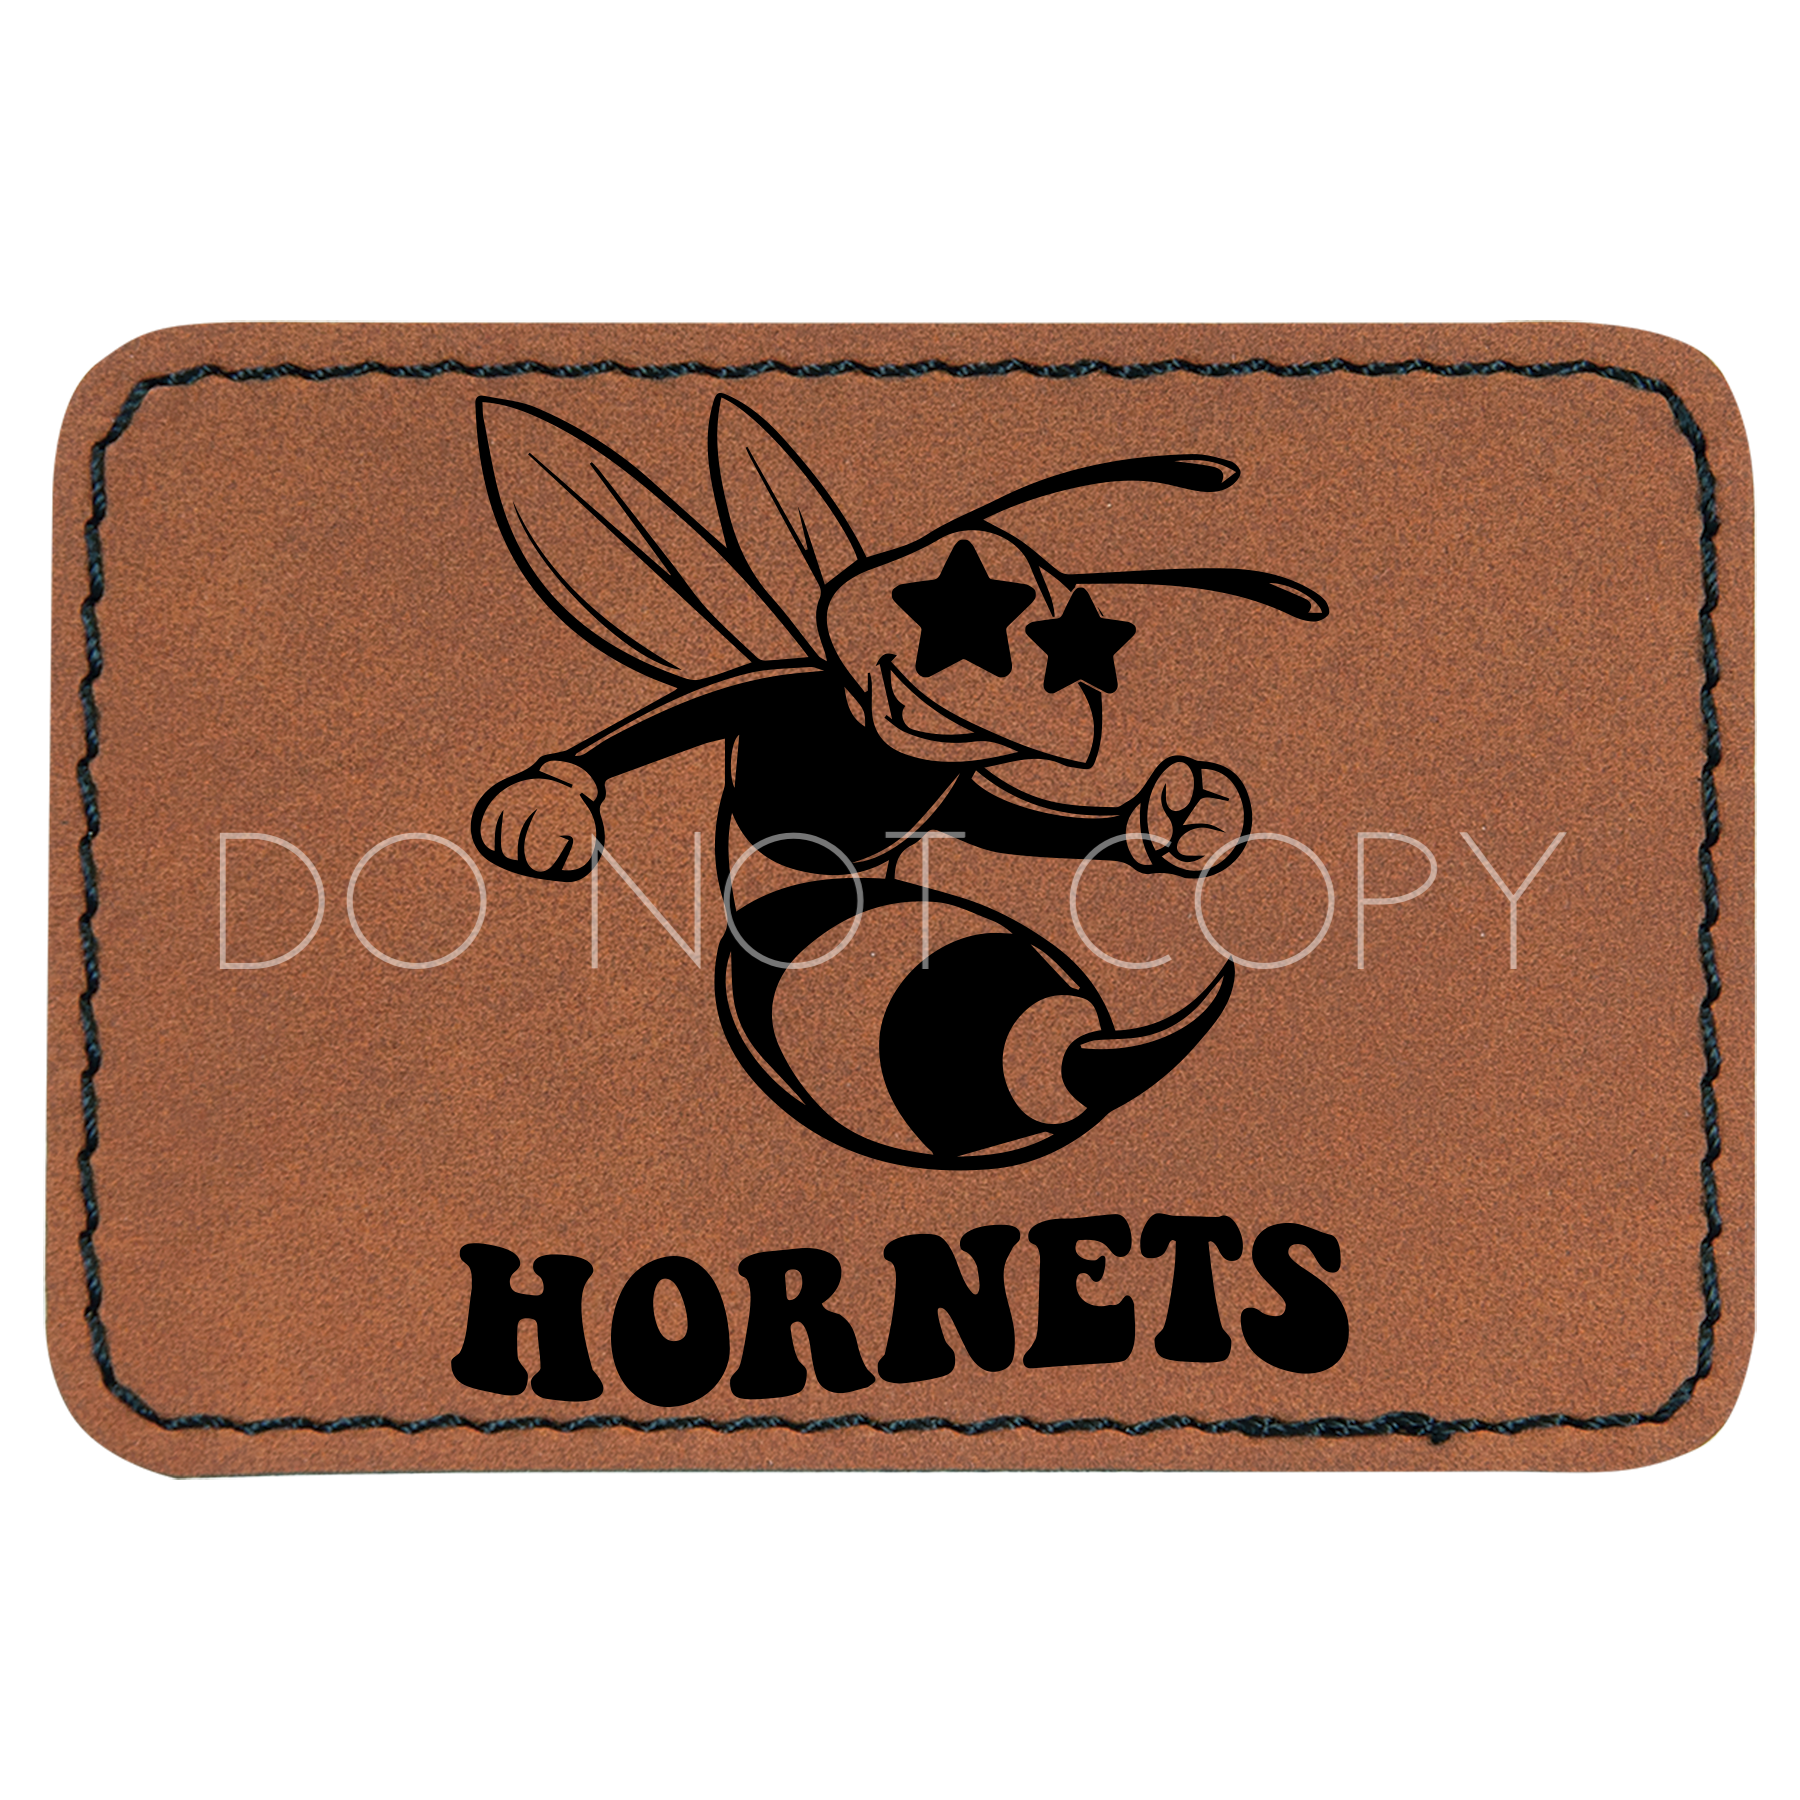 Preppy Hornets Mascot Patch